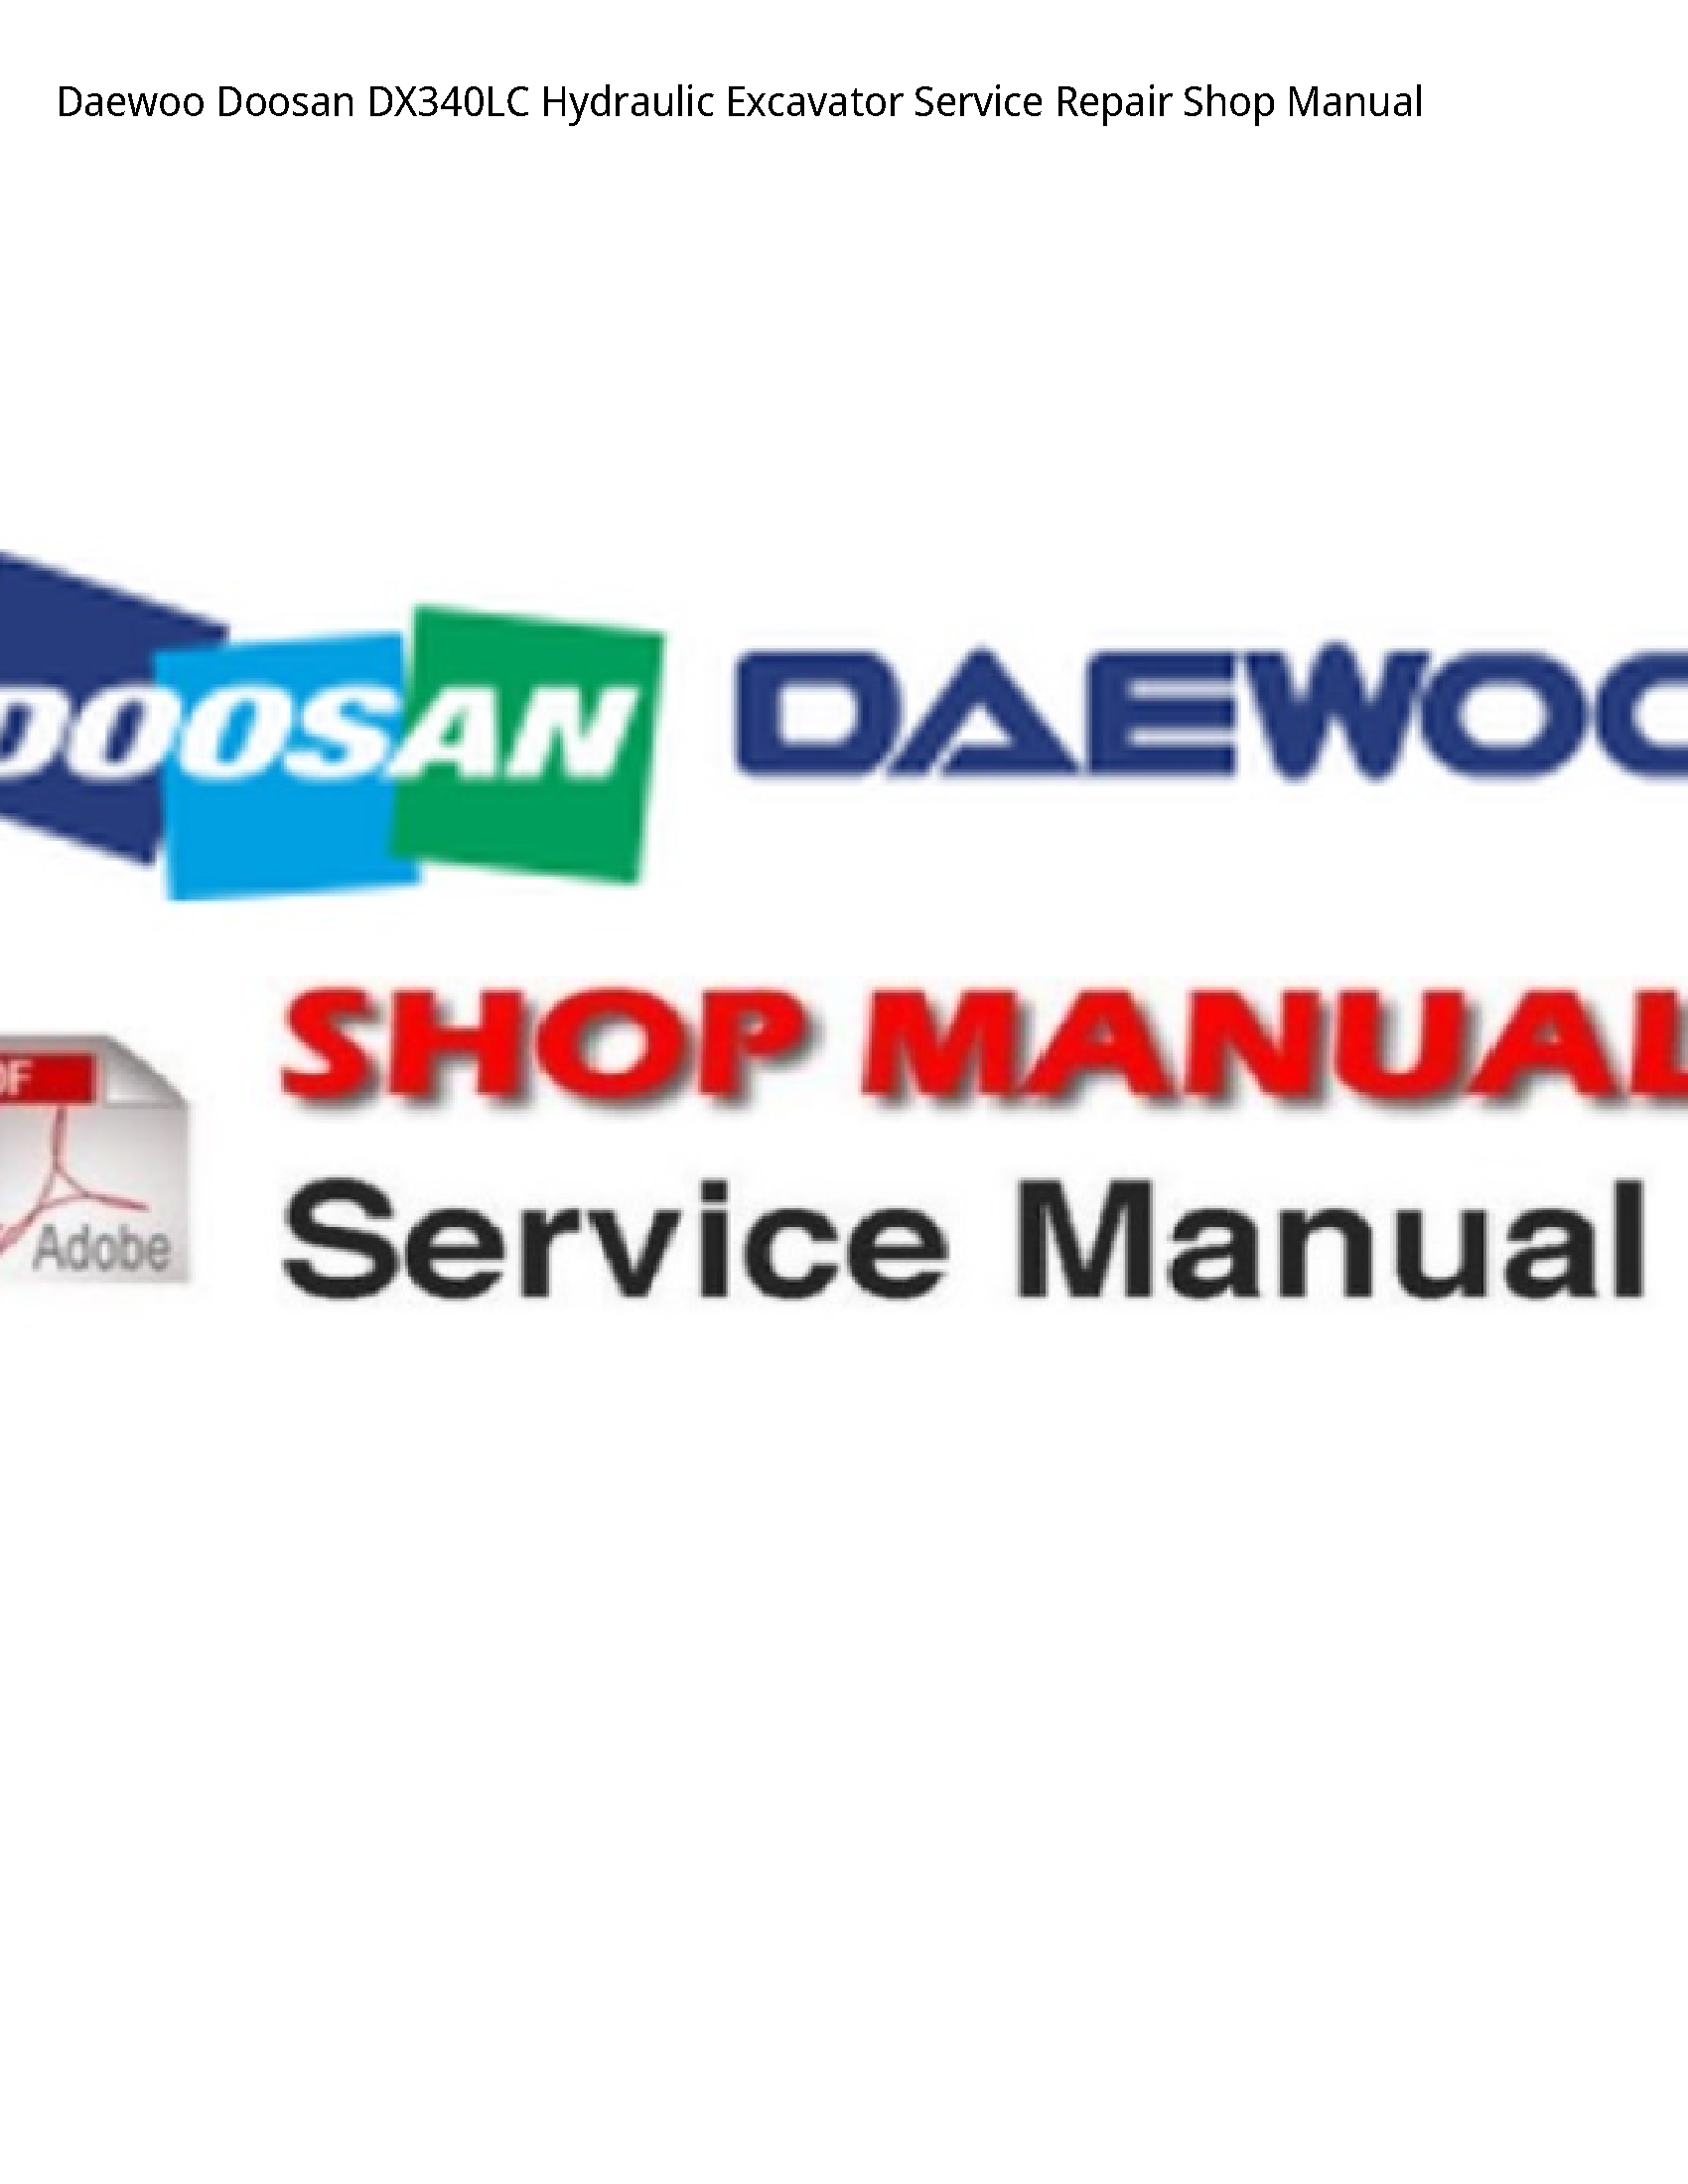 Daewoo Doosan DX340LC Hydraulic Excavator manual